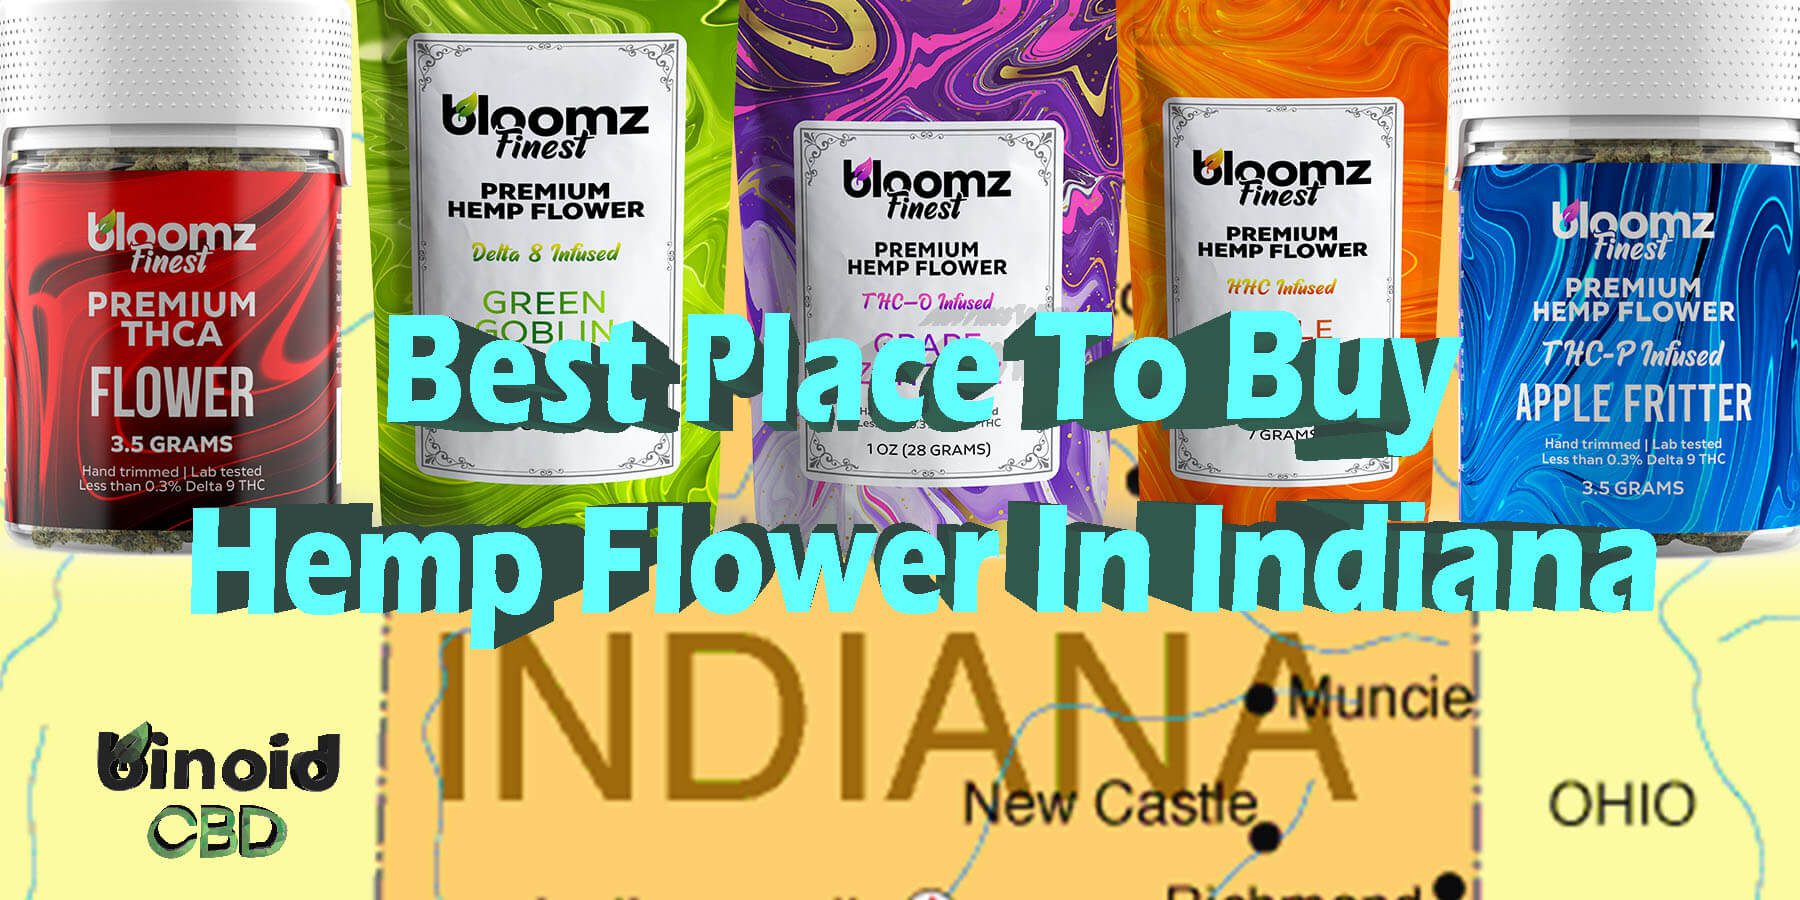 Buy THCP Flower Hemp Indiana Rolls Get Online Near Me For Sale Best Brand Strongest Real Legal Store Shop Reddit